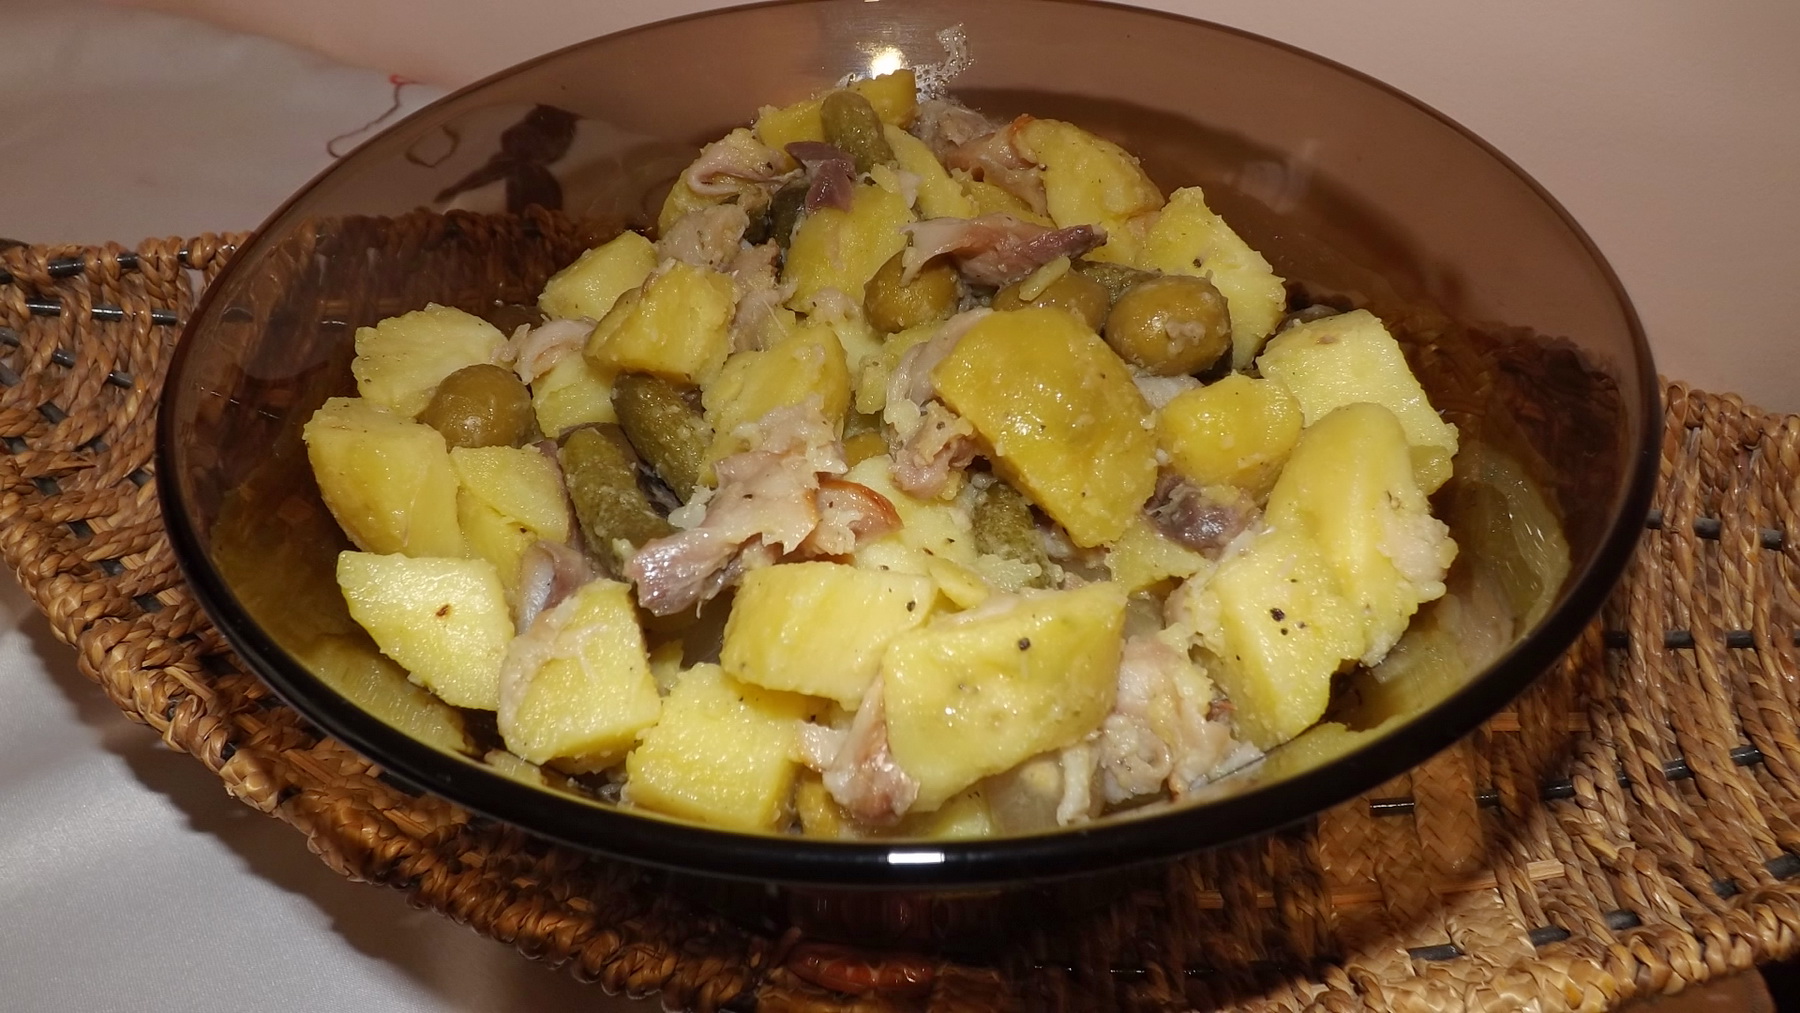 Salata de cartofi cu macrou afumat